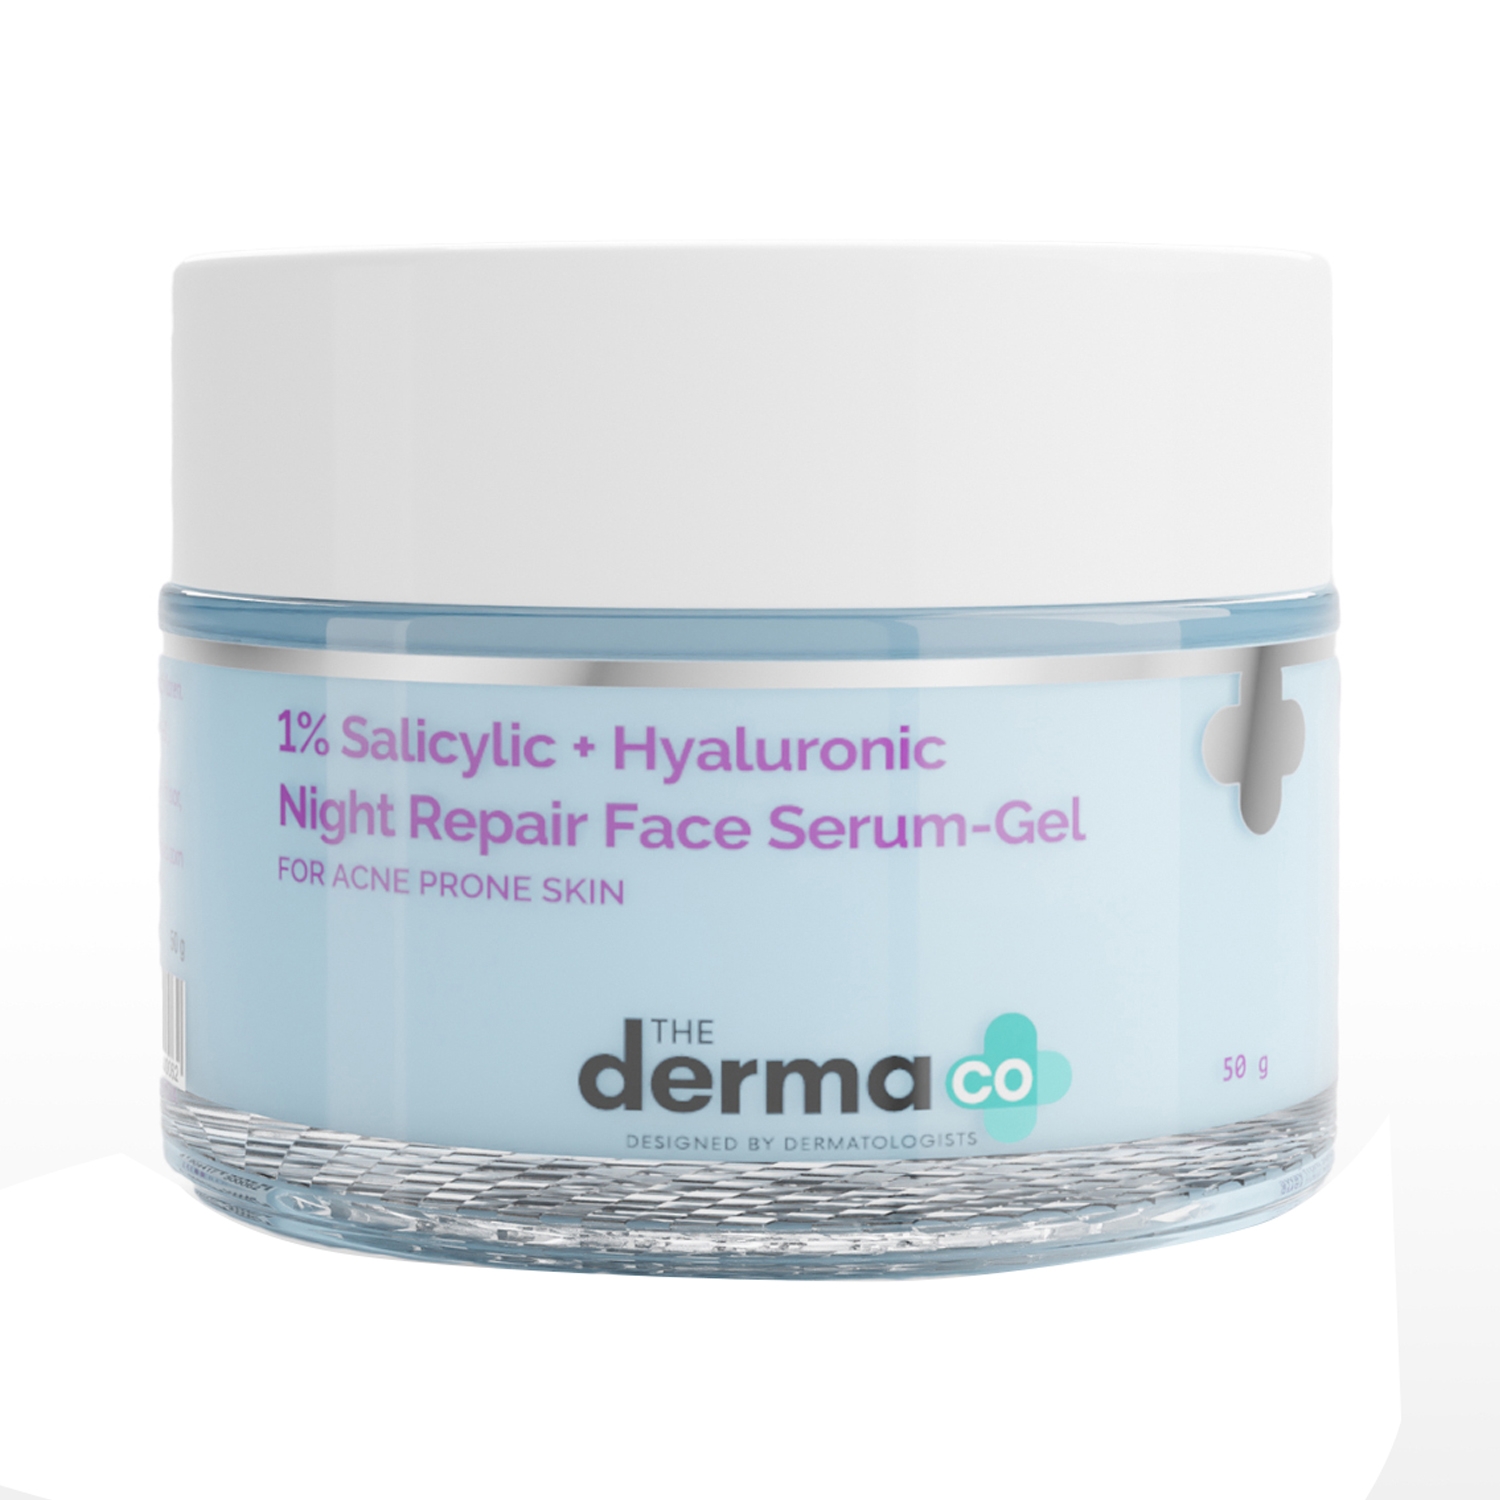 The Derma Co | The Derma Co 1% Salicylic + Hyaluronic Night Repair Face Serum (50g)